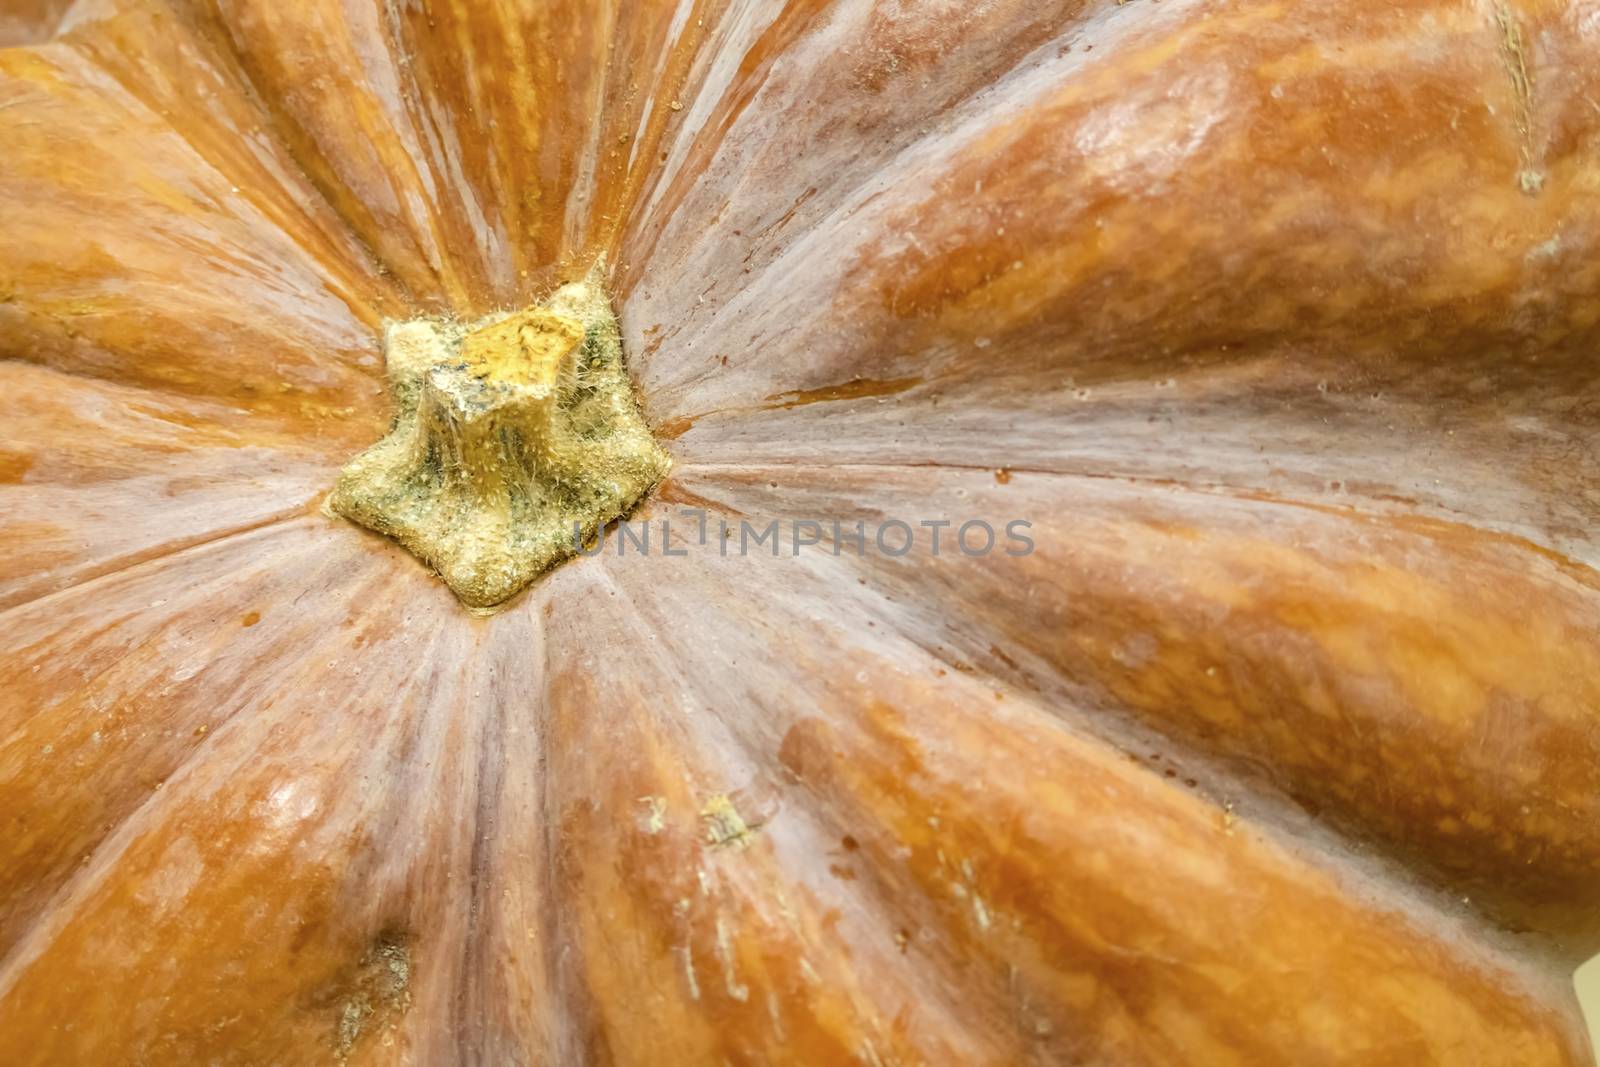 close up pumpkins in market stall by yilmazsavaskandag